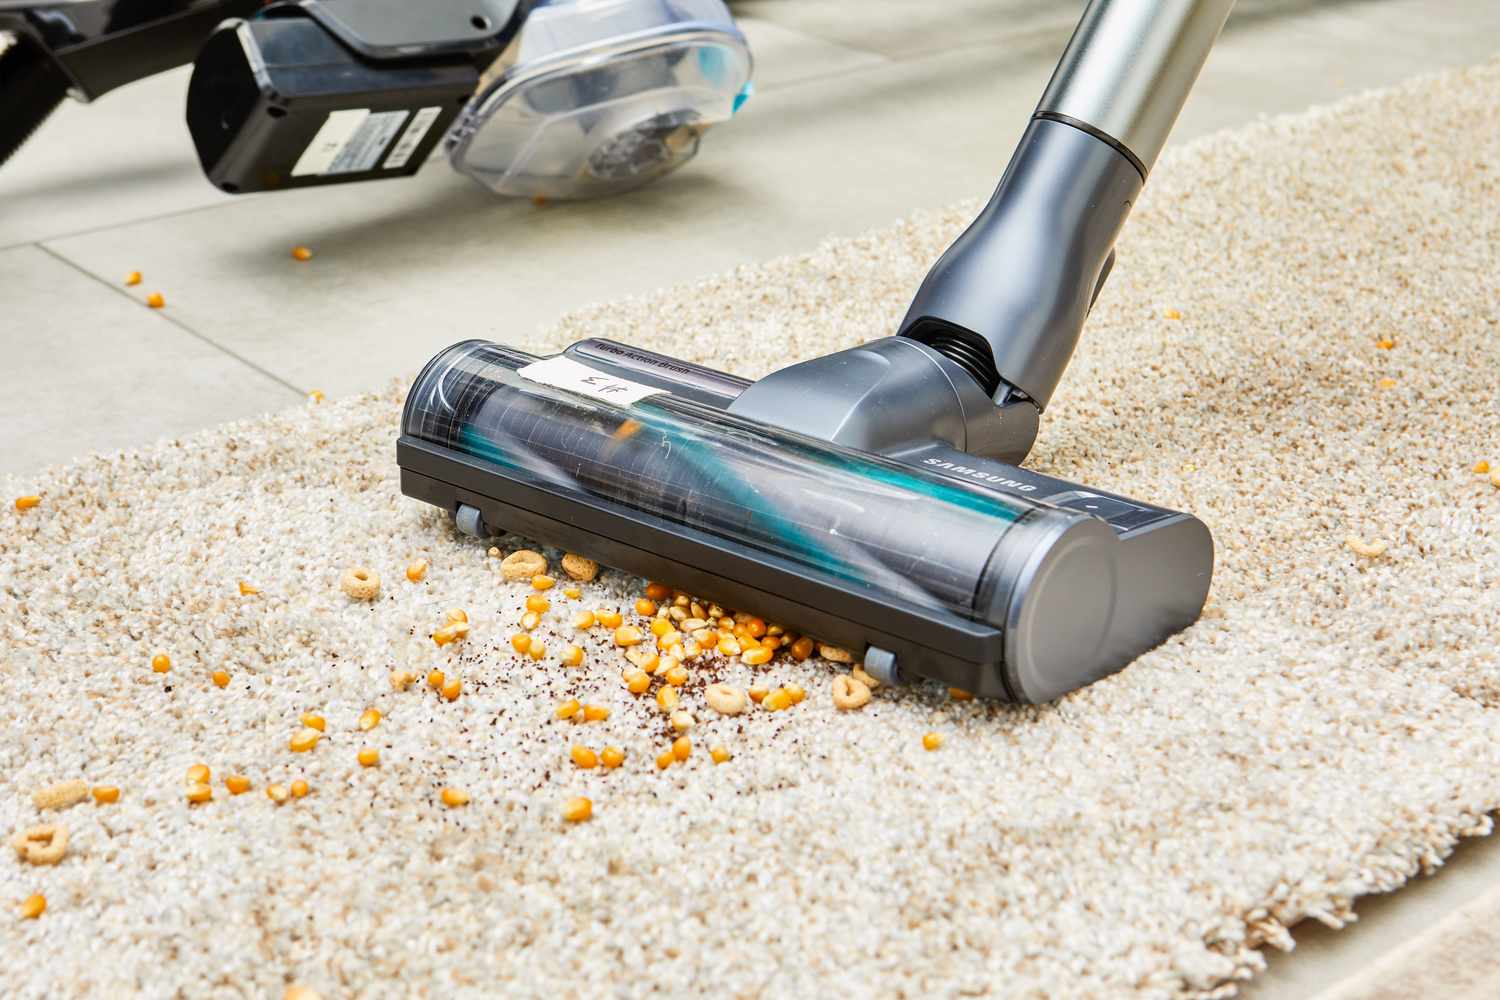 Samsung Jet 75 Cordless Stick Vacuum picking up crumbs on carpet